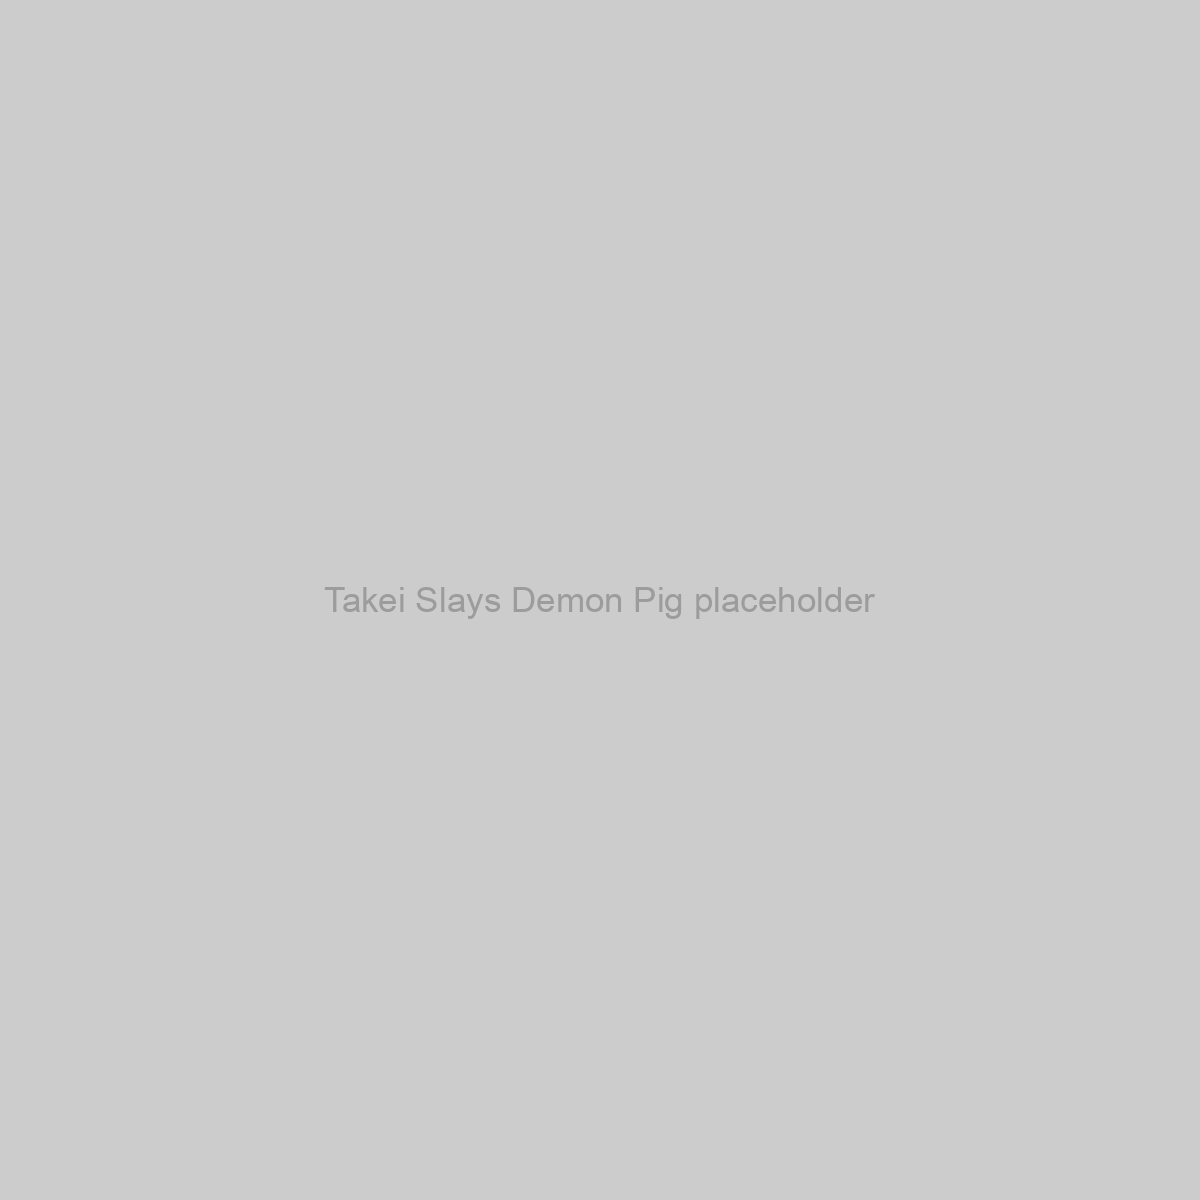 Takei Slays Demon Pig Placeholder Image